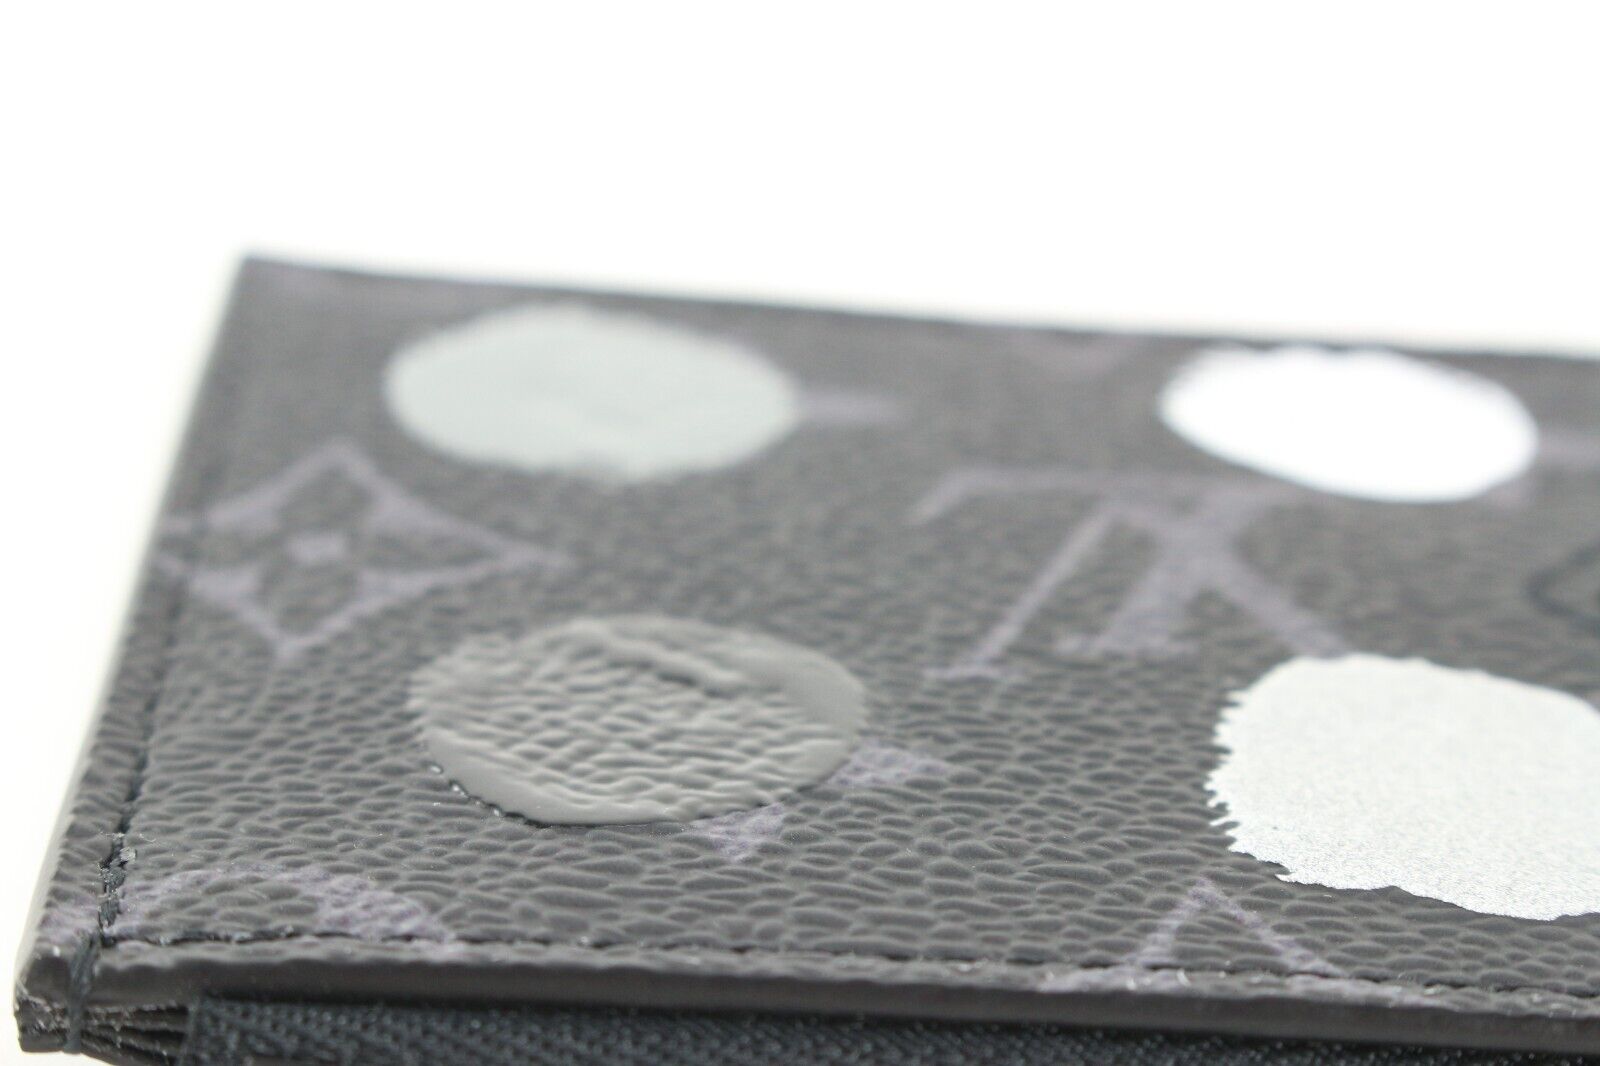 Louis Vuitton Coin Card Holder Eclipse Monogram Eclipse